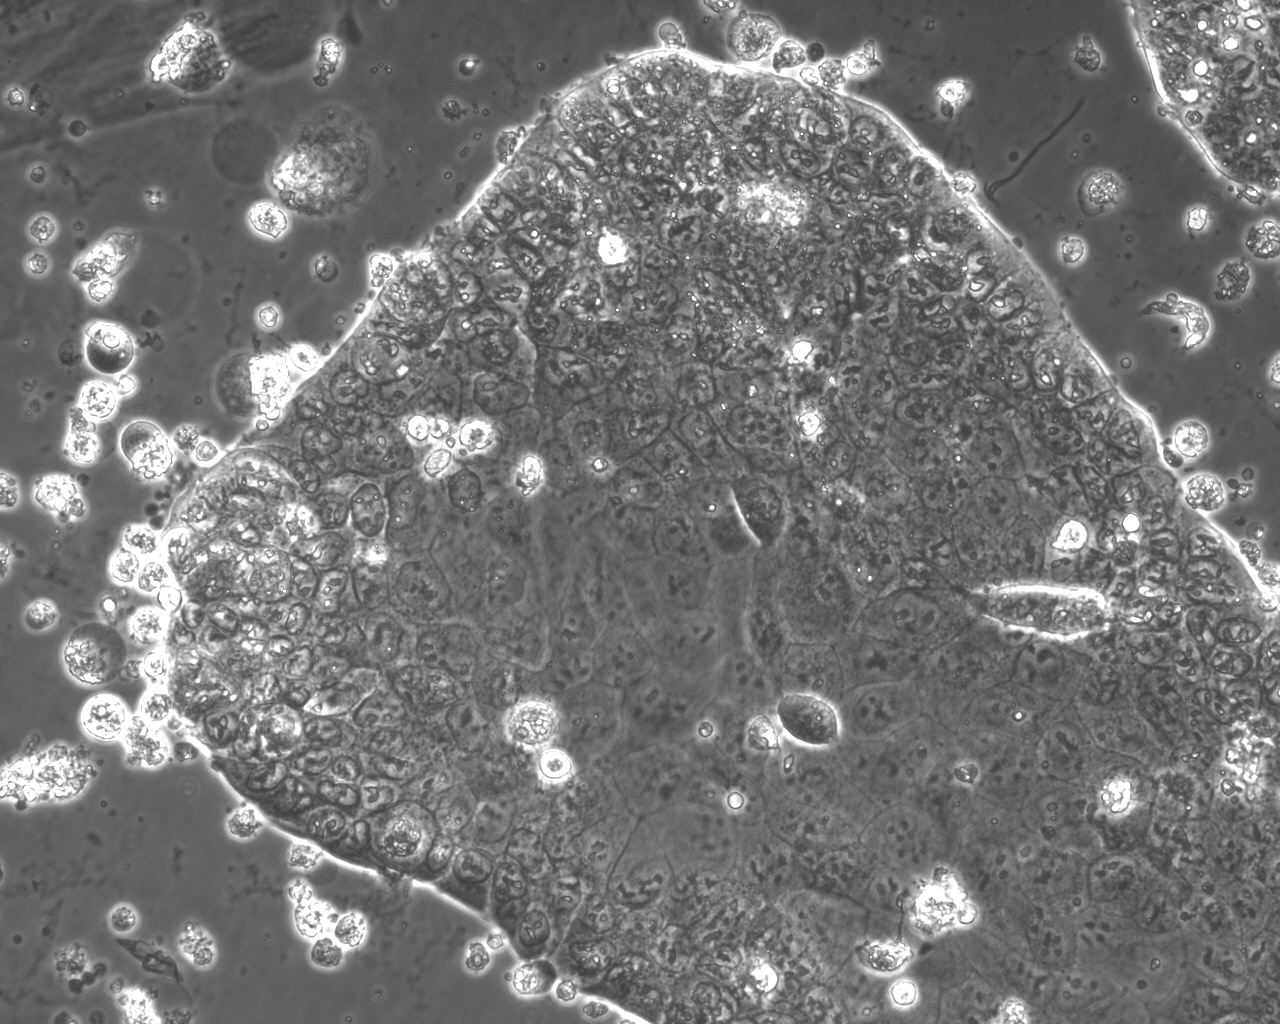 Células madre placentarias artificiales